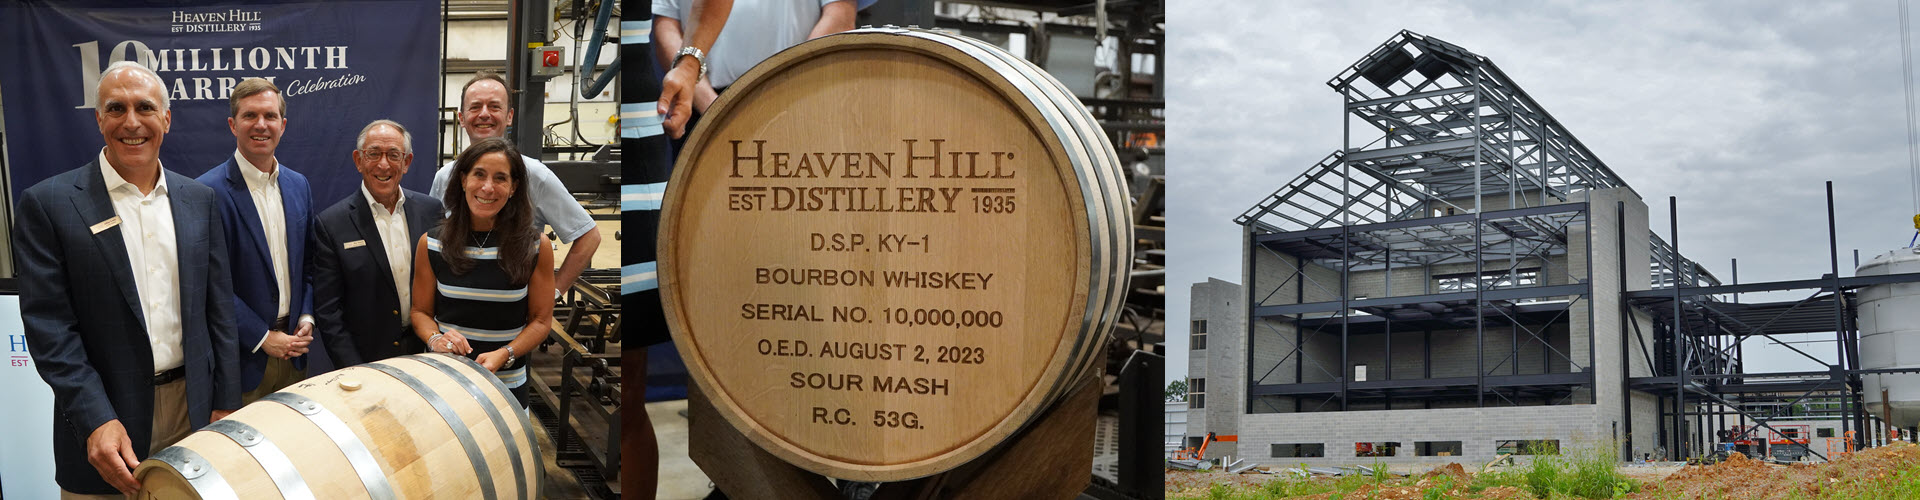 Heaven Hill Distillery - Heaven Hill Fills its 10 Millionth Barrel of Bourbon Since its 1935 Founding